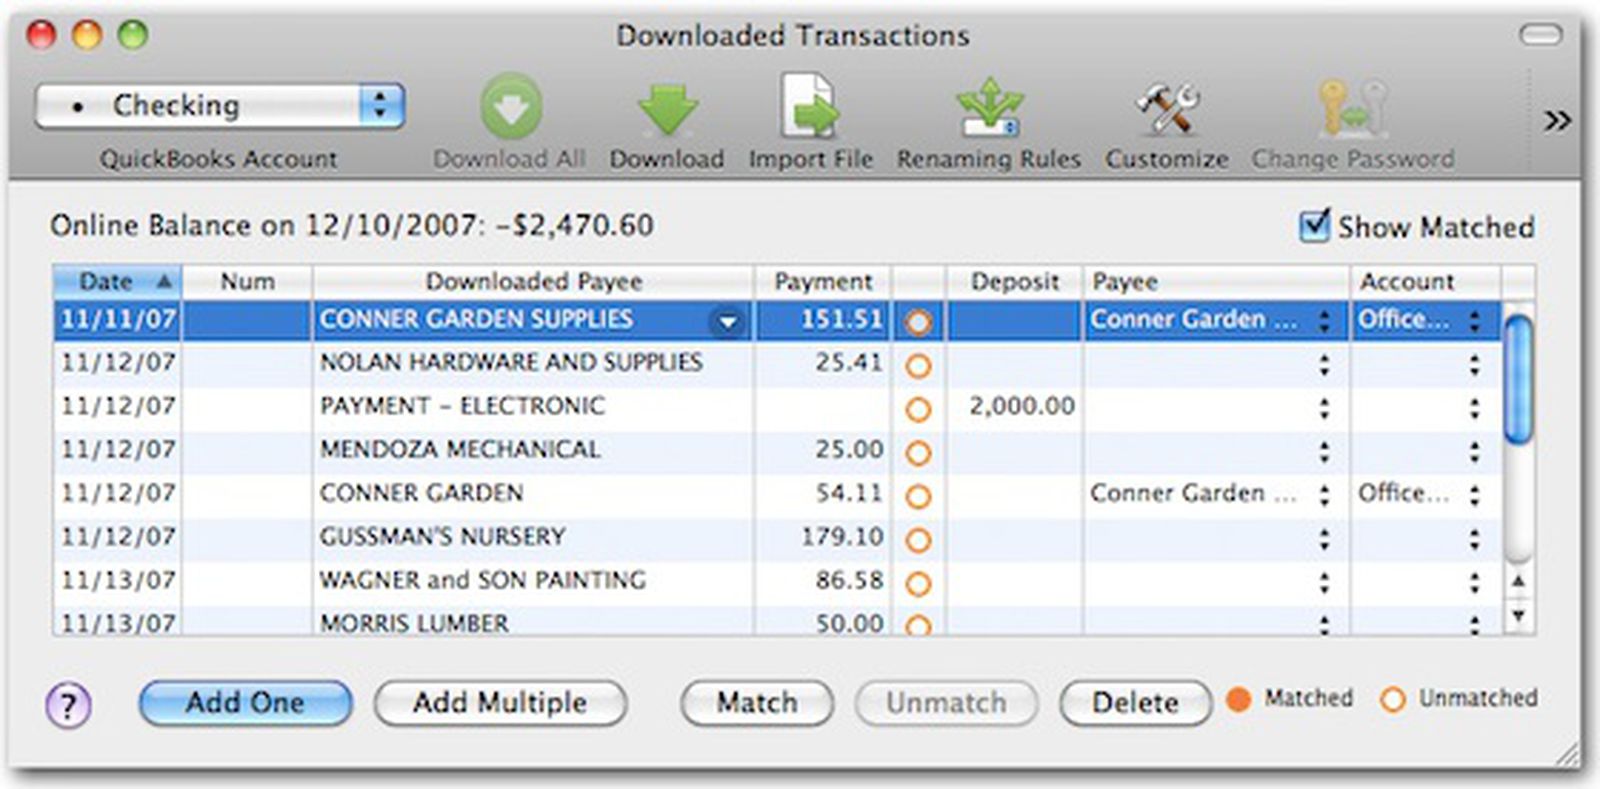 quickbooks for mac download at costco